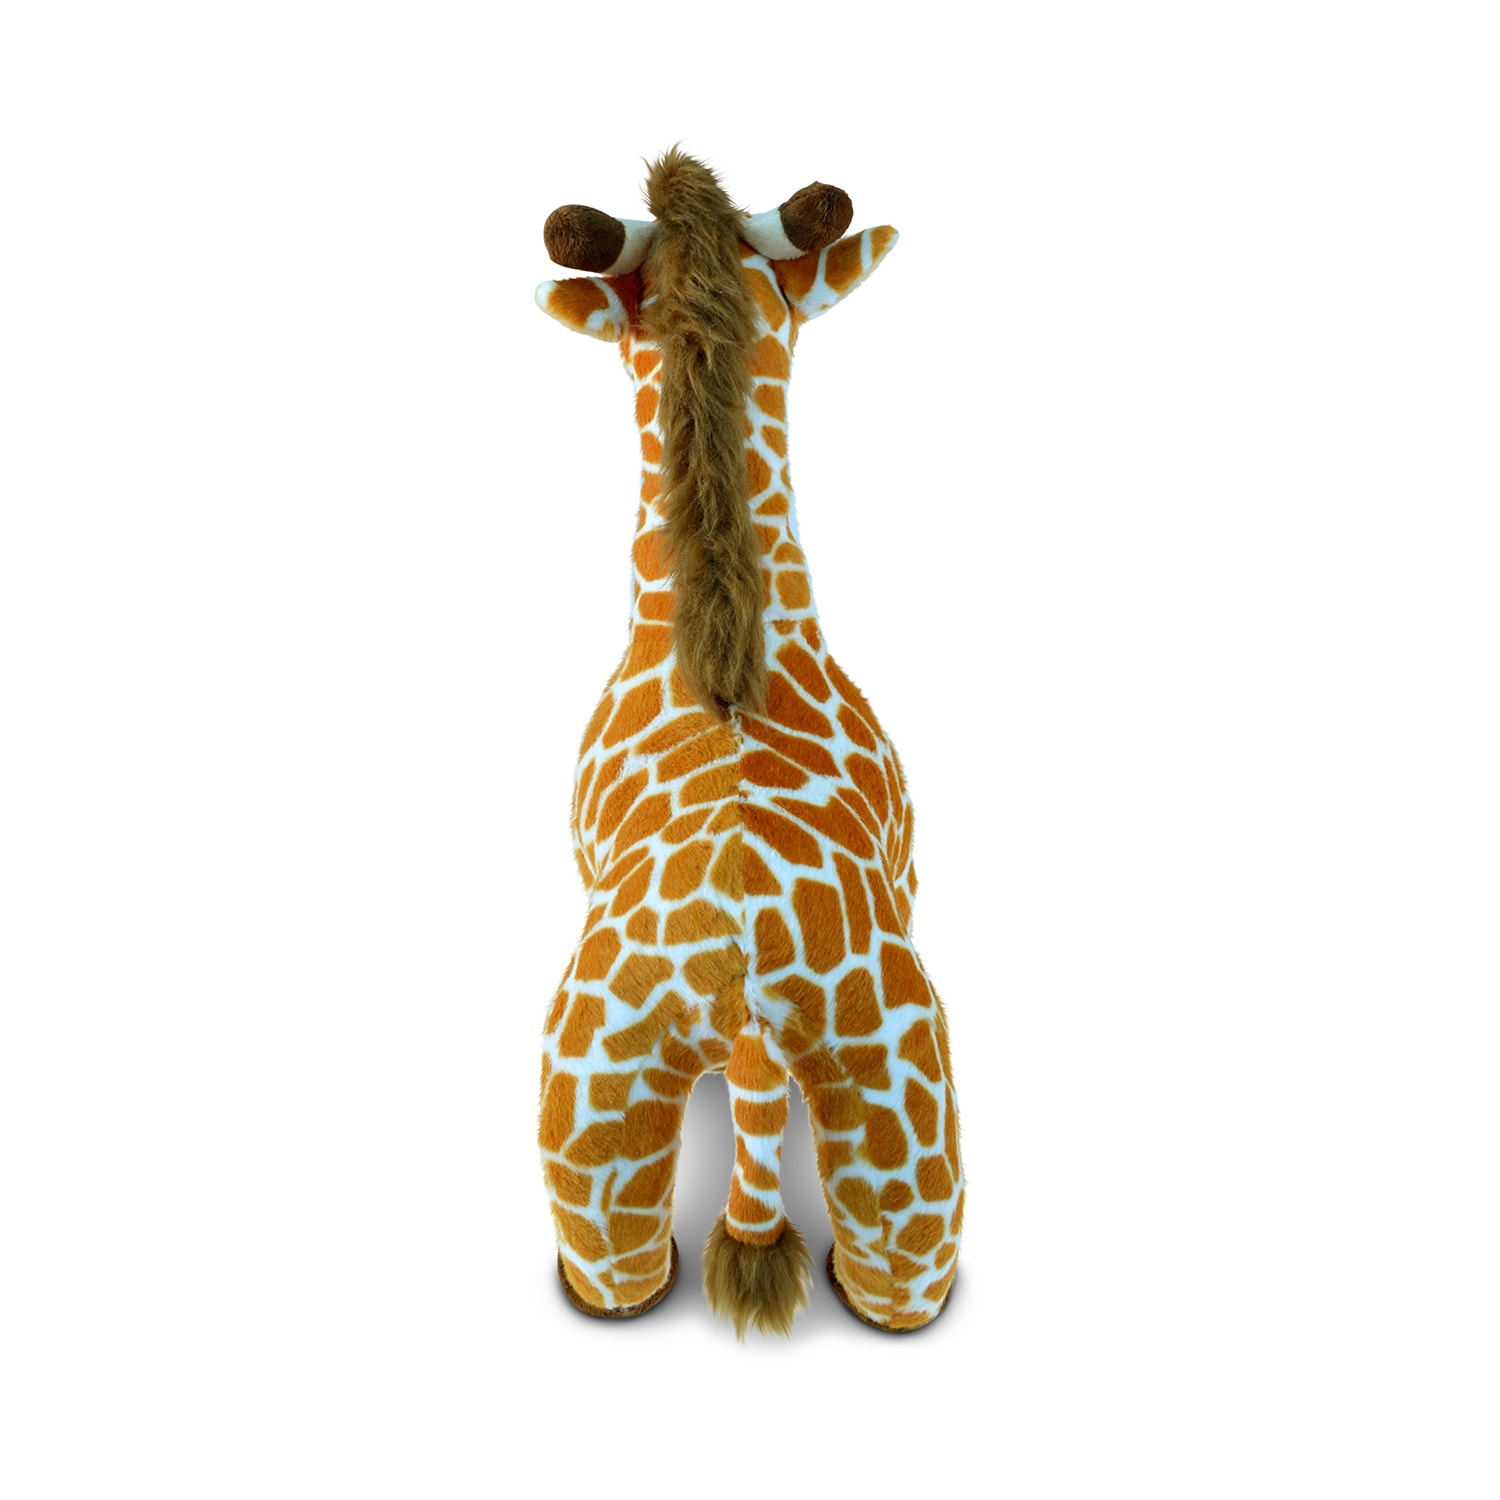 giant cuddly giraffe